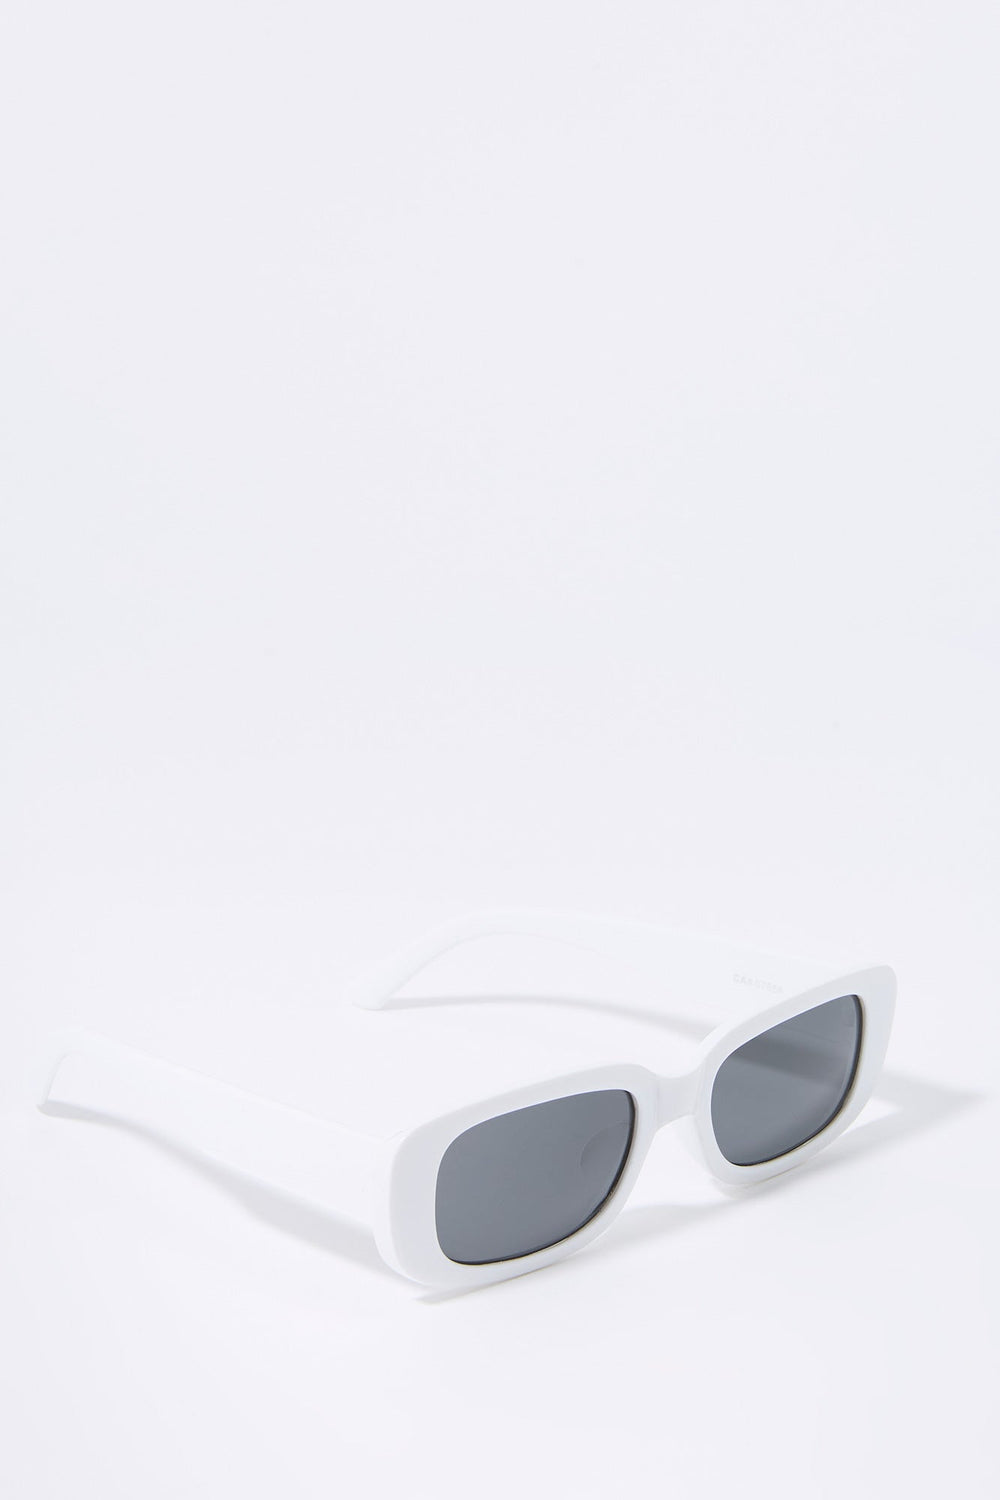 White Rectangle Sunglasses White Rectangle Sunglasses 2